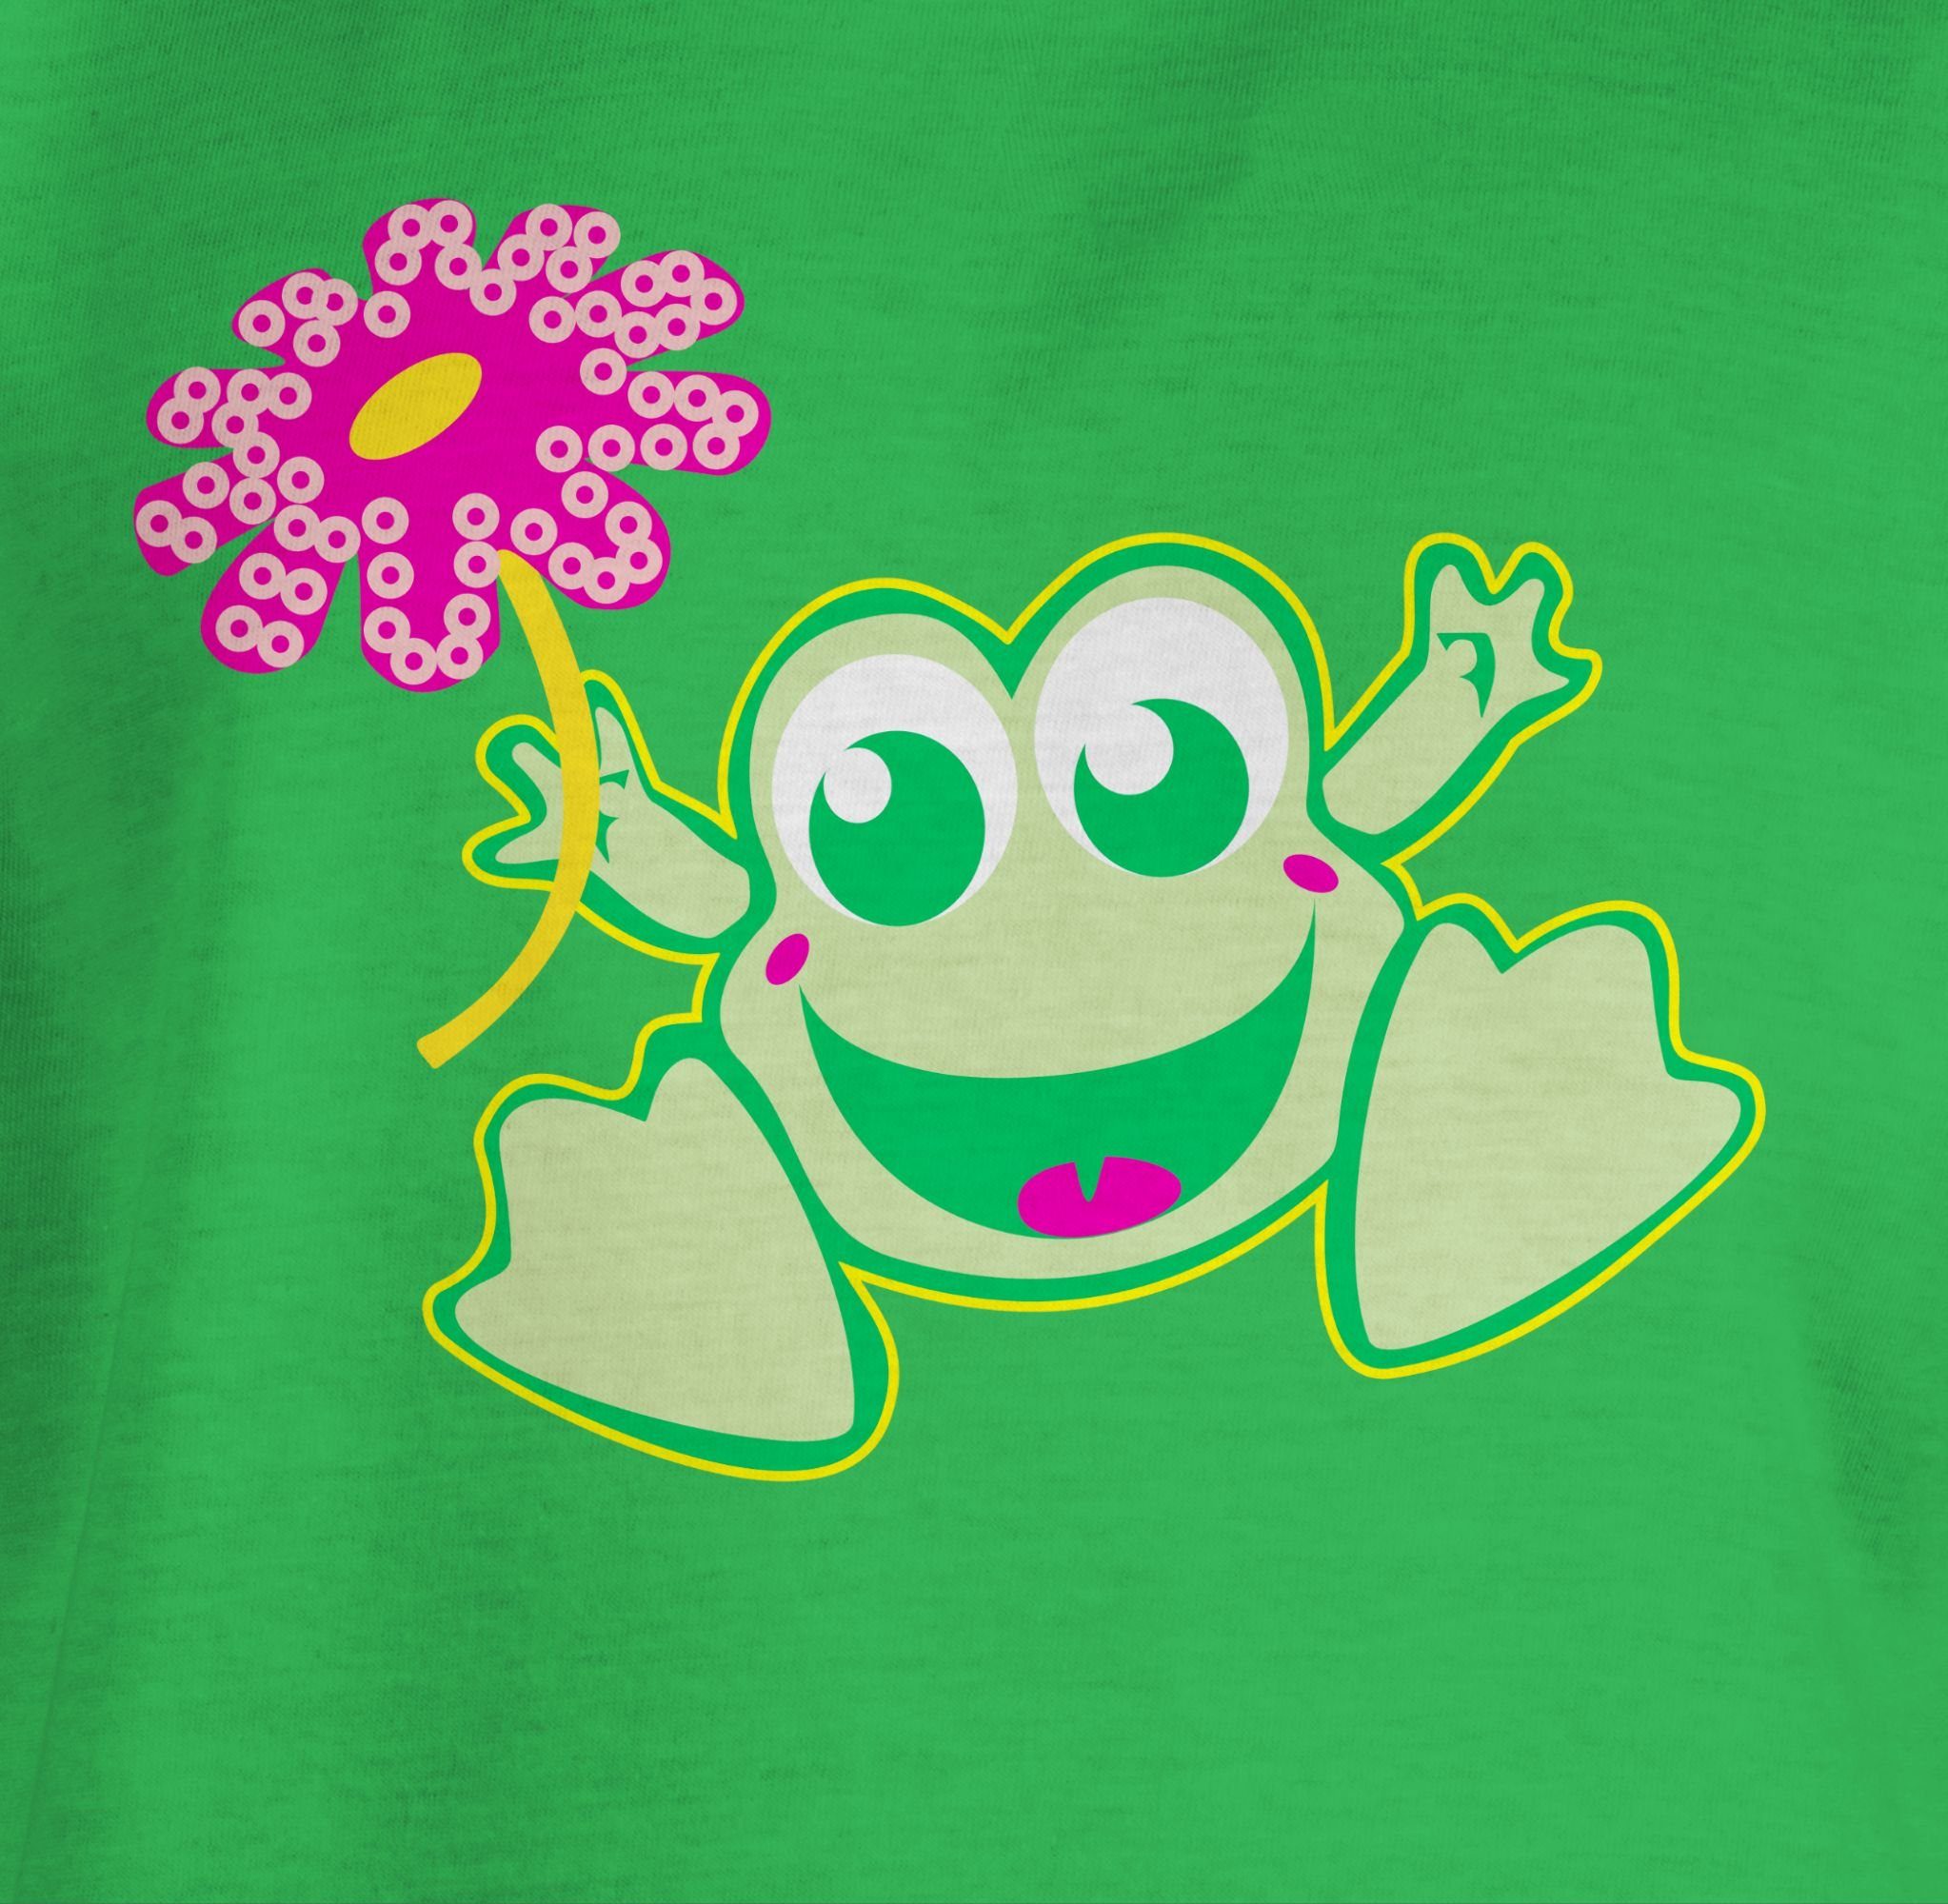 1 Blume Grün Kindermotive Shirtracer T-Shirt mit Frosch